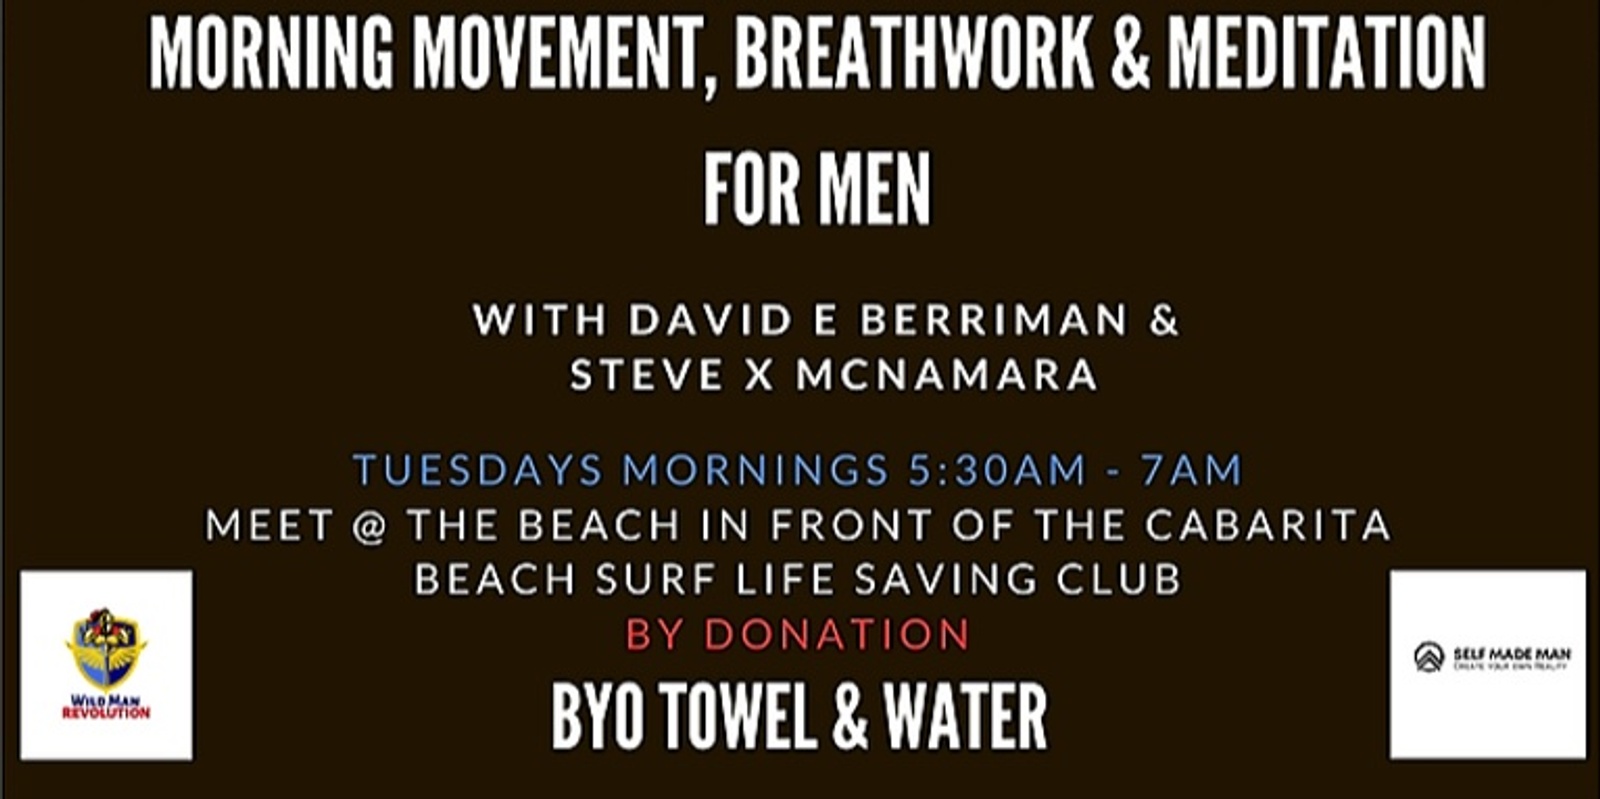 Banner image for Men's Morning Movement, Breathwork & Meditation @ Cabaritta Beach